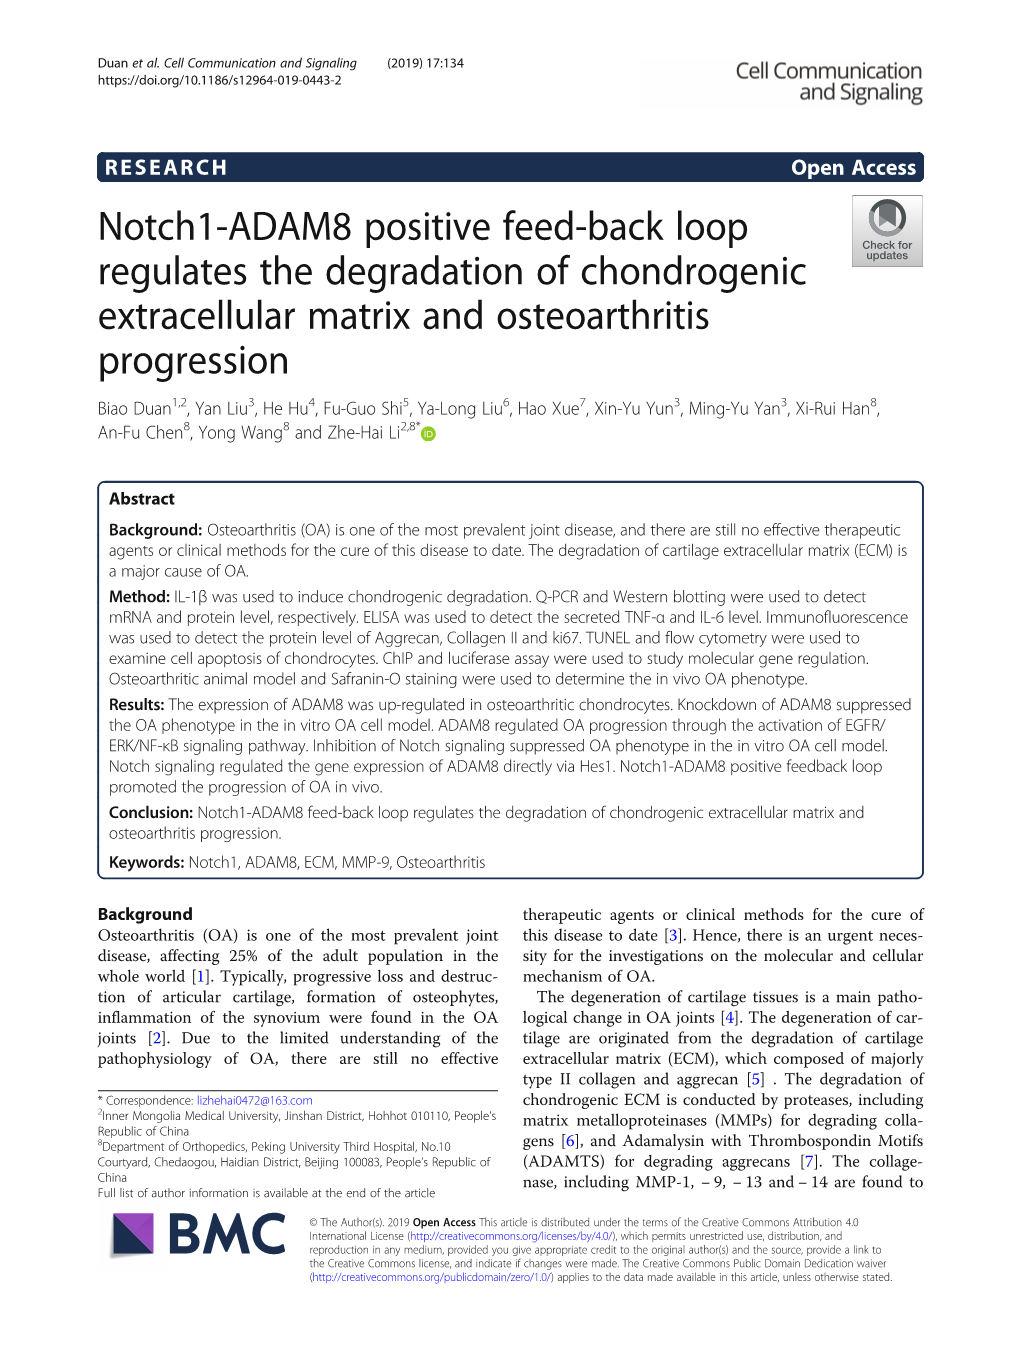 Notch1-ADAM8 Positive Feed-Back Loop Regulates the Degradation Of